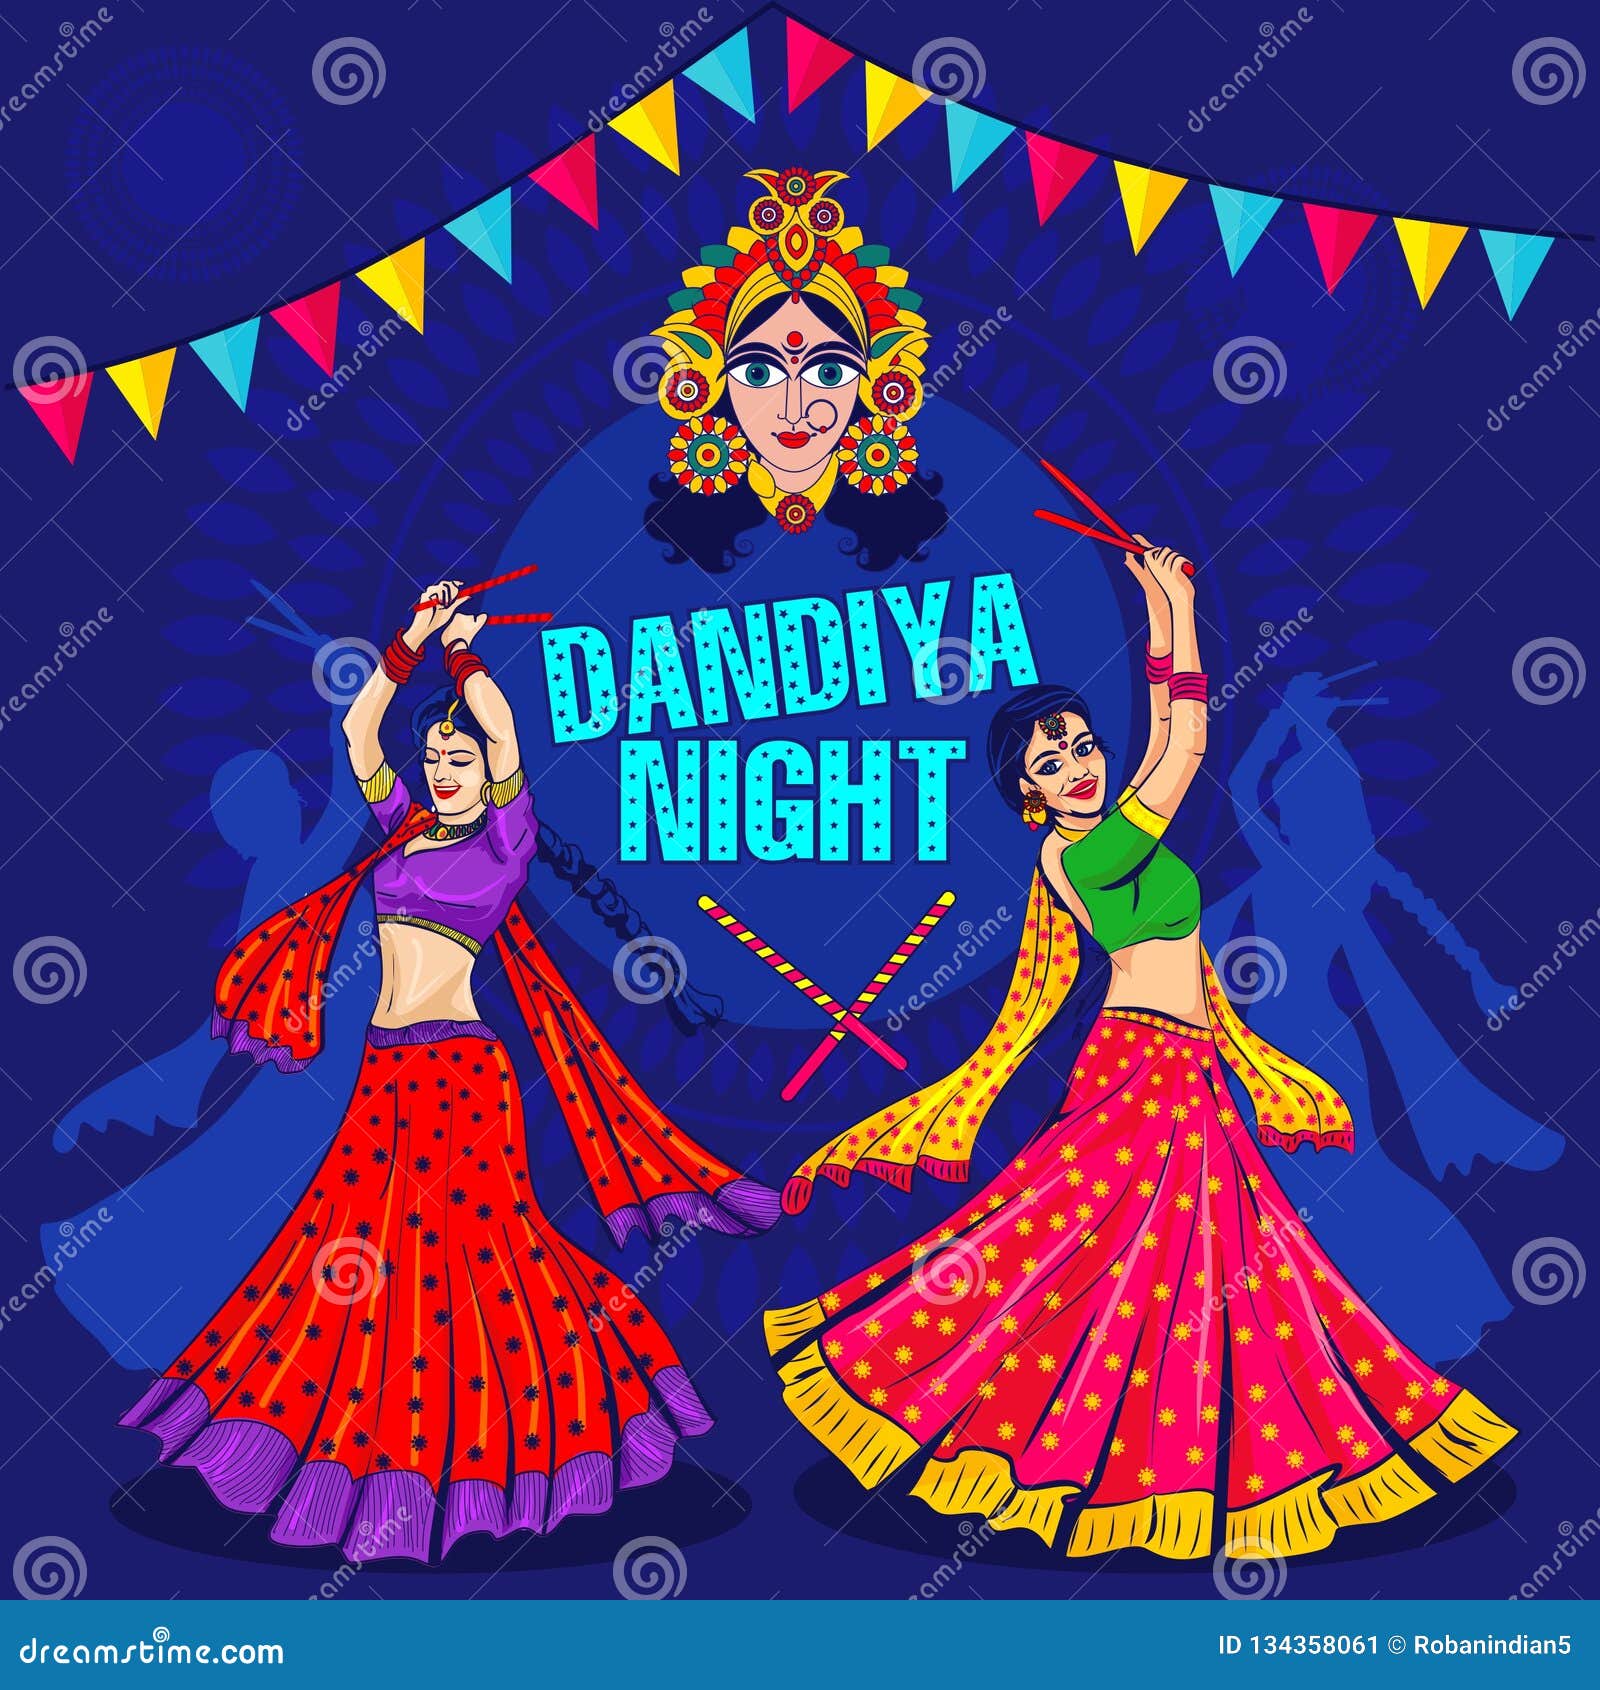 Shubhangi Atre plans to enjoy dandiya, garba nights on Navratri